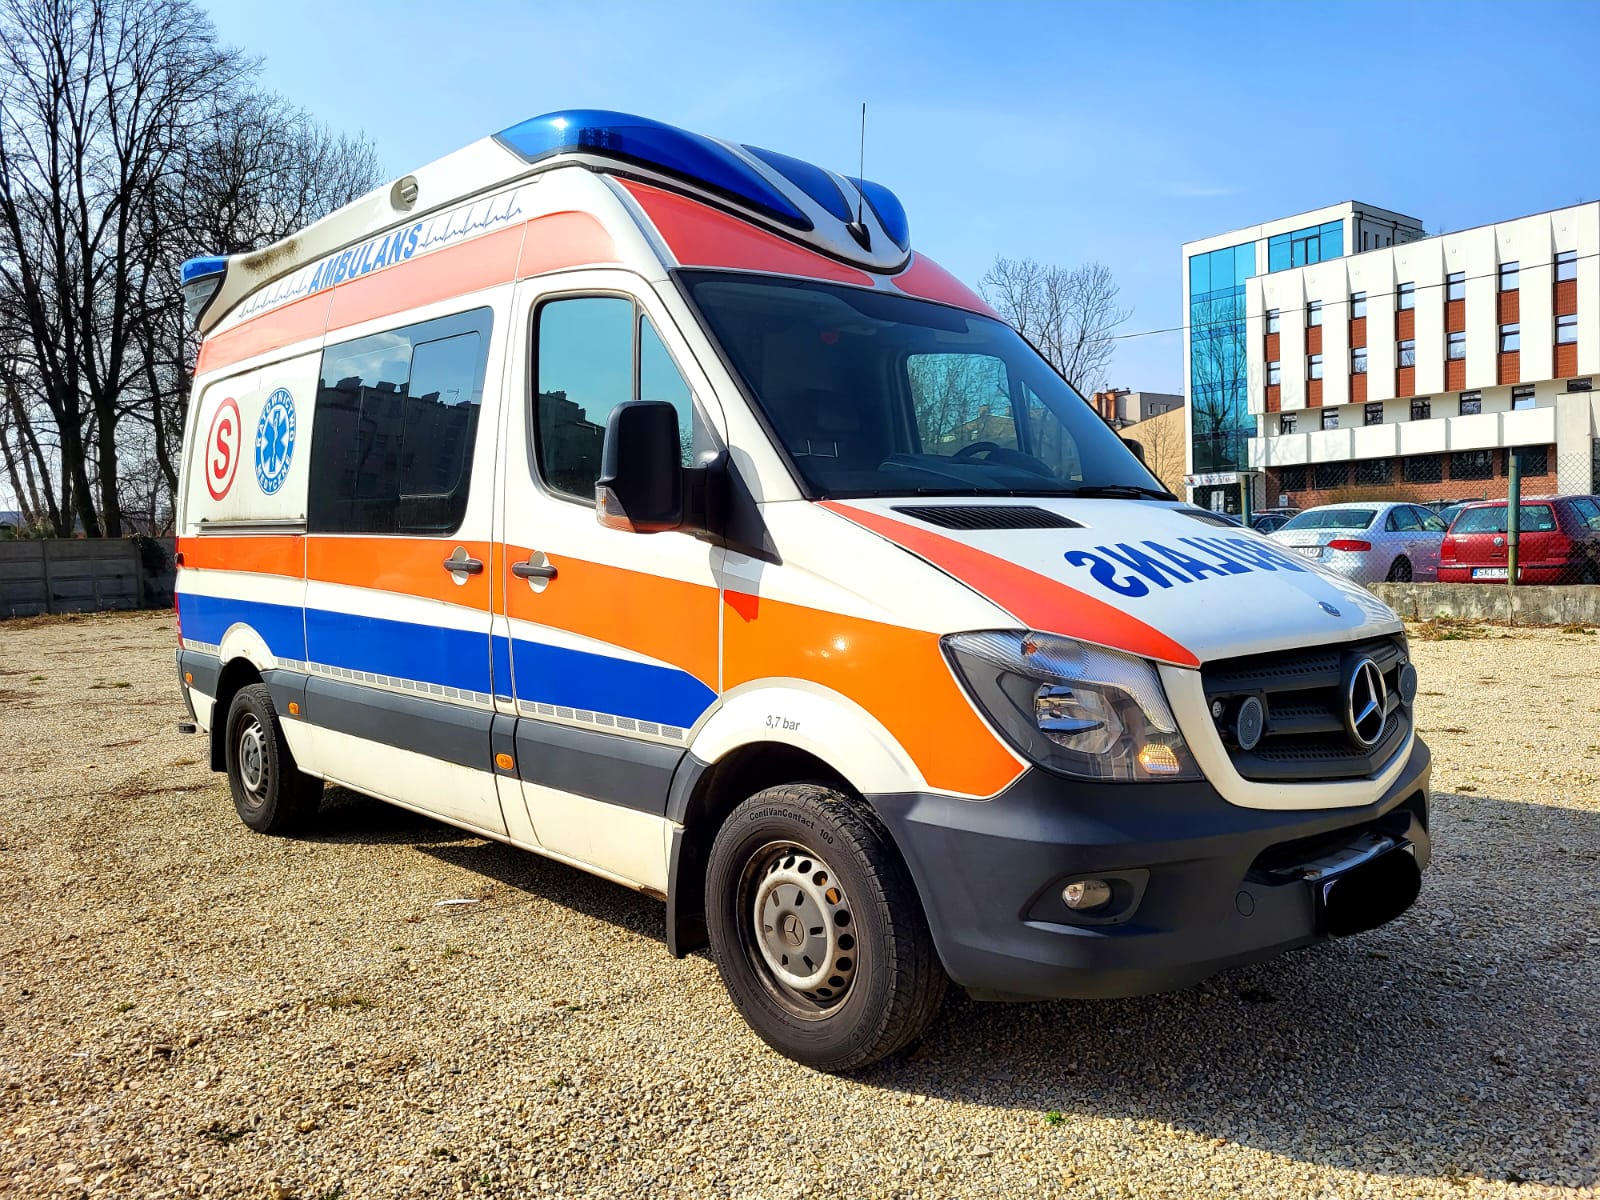 Ambulance parked outside of medical facility